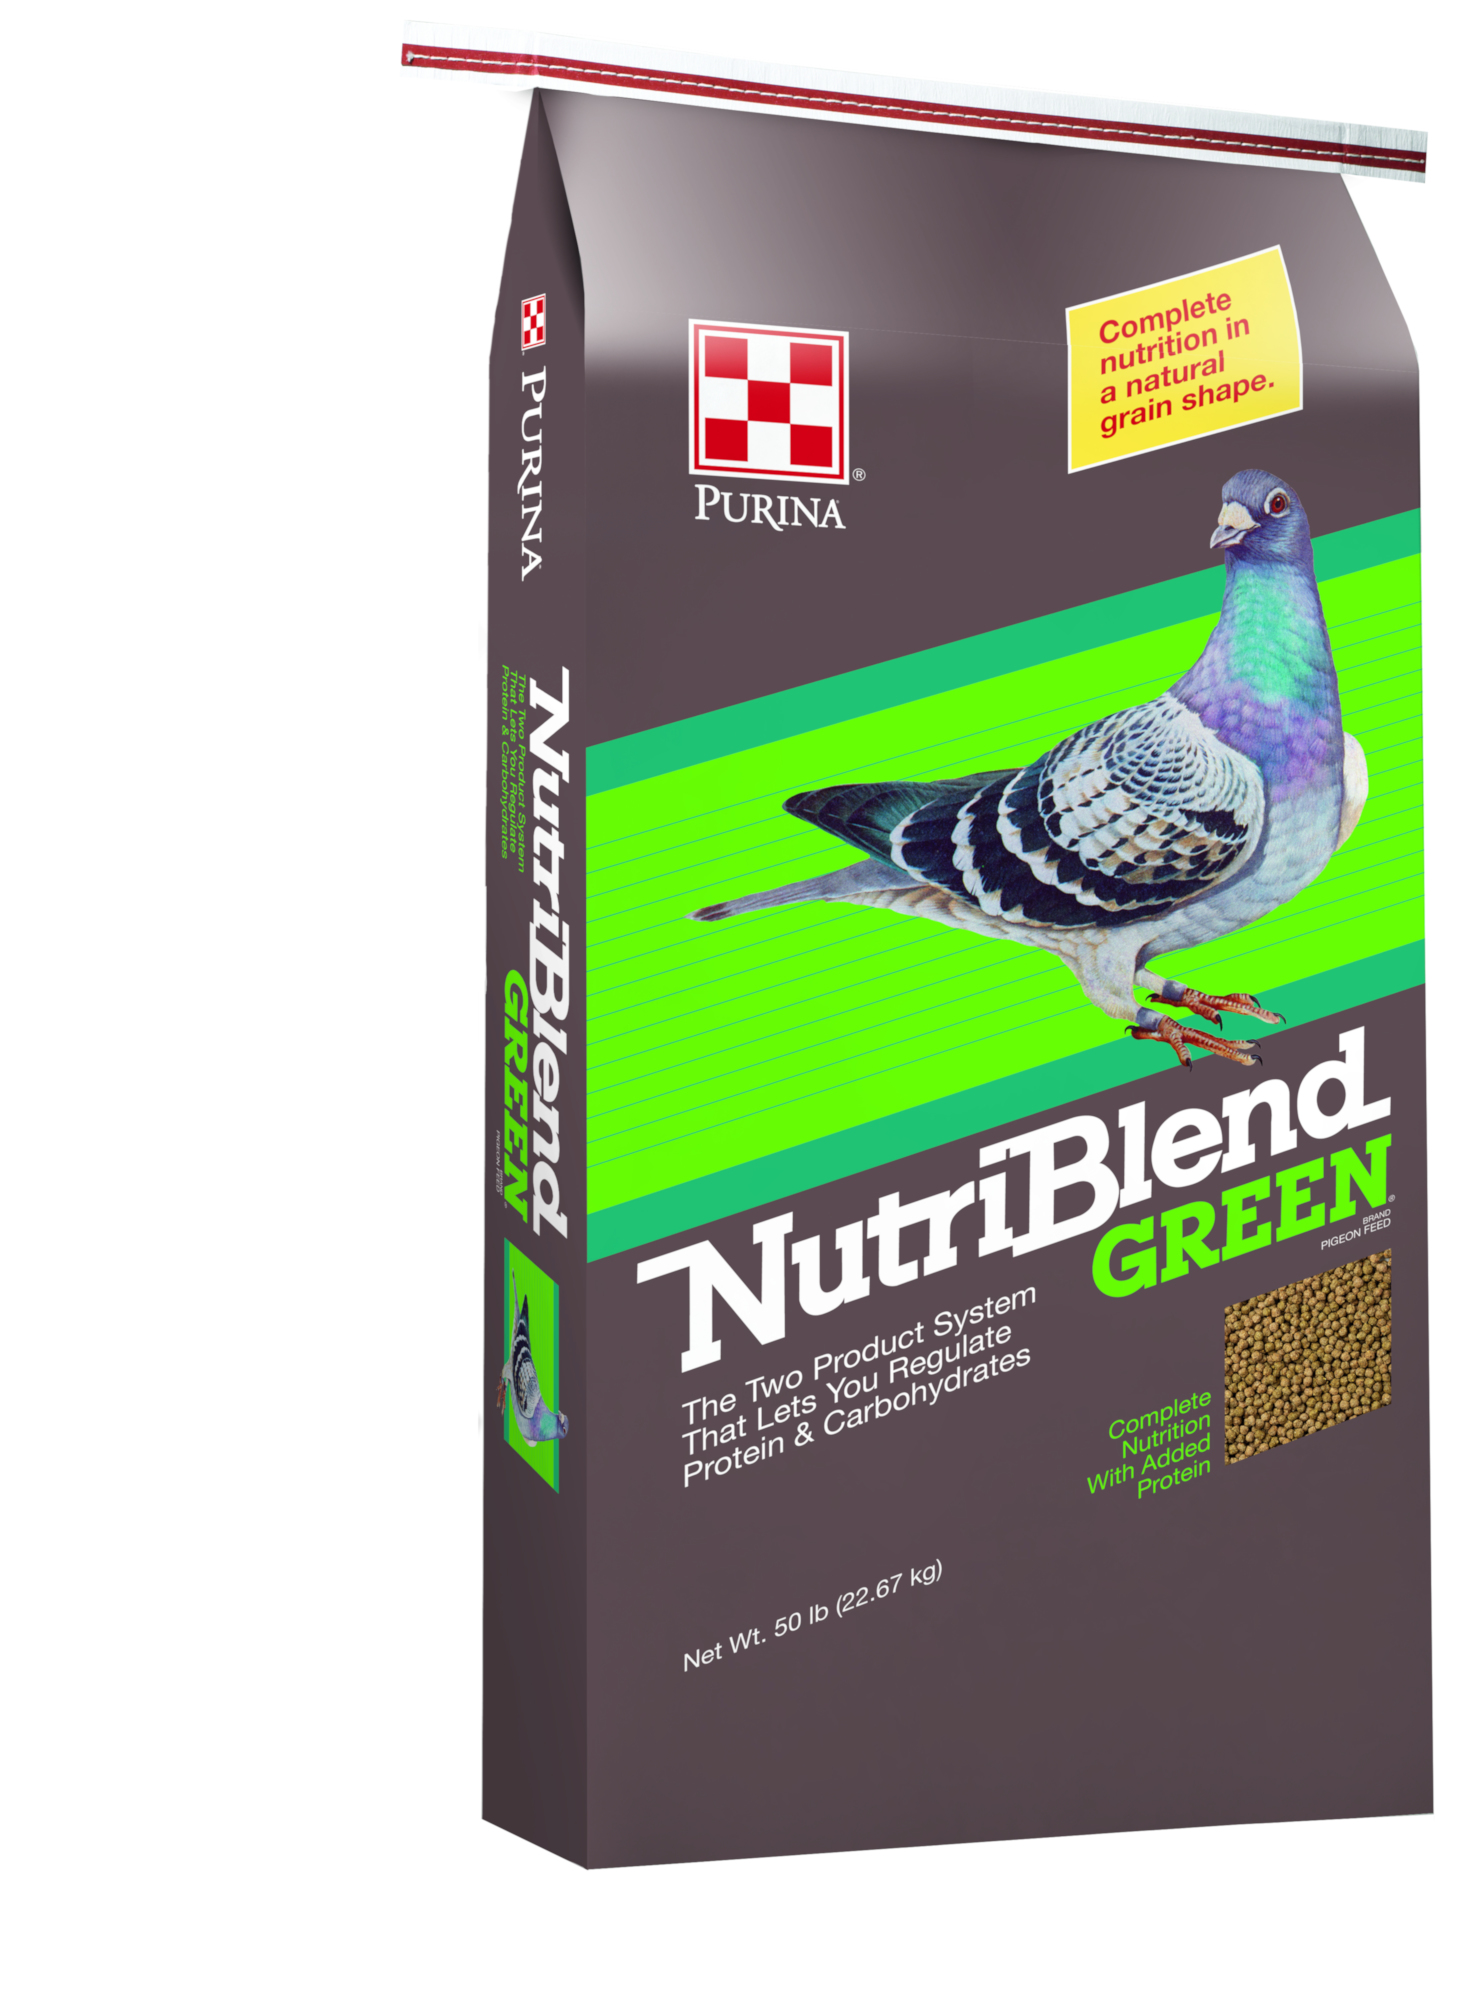 Purina&reg; NutriBlend Green&reg; Pigeon Feed, 50 lbs